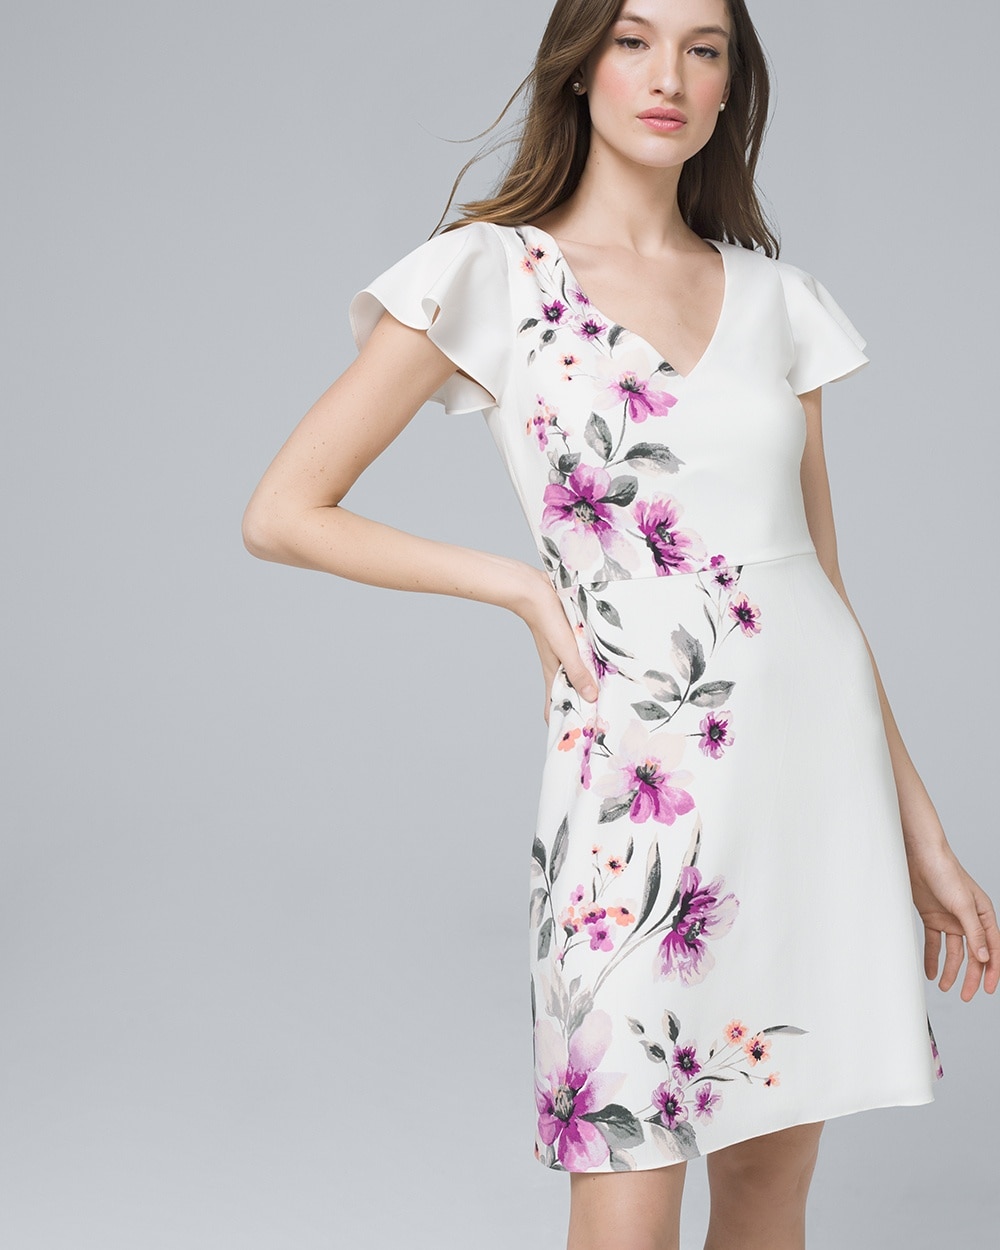 floral dress white